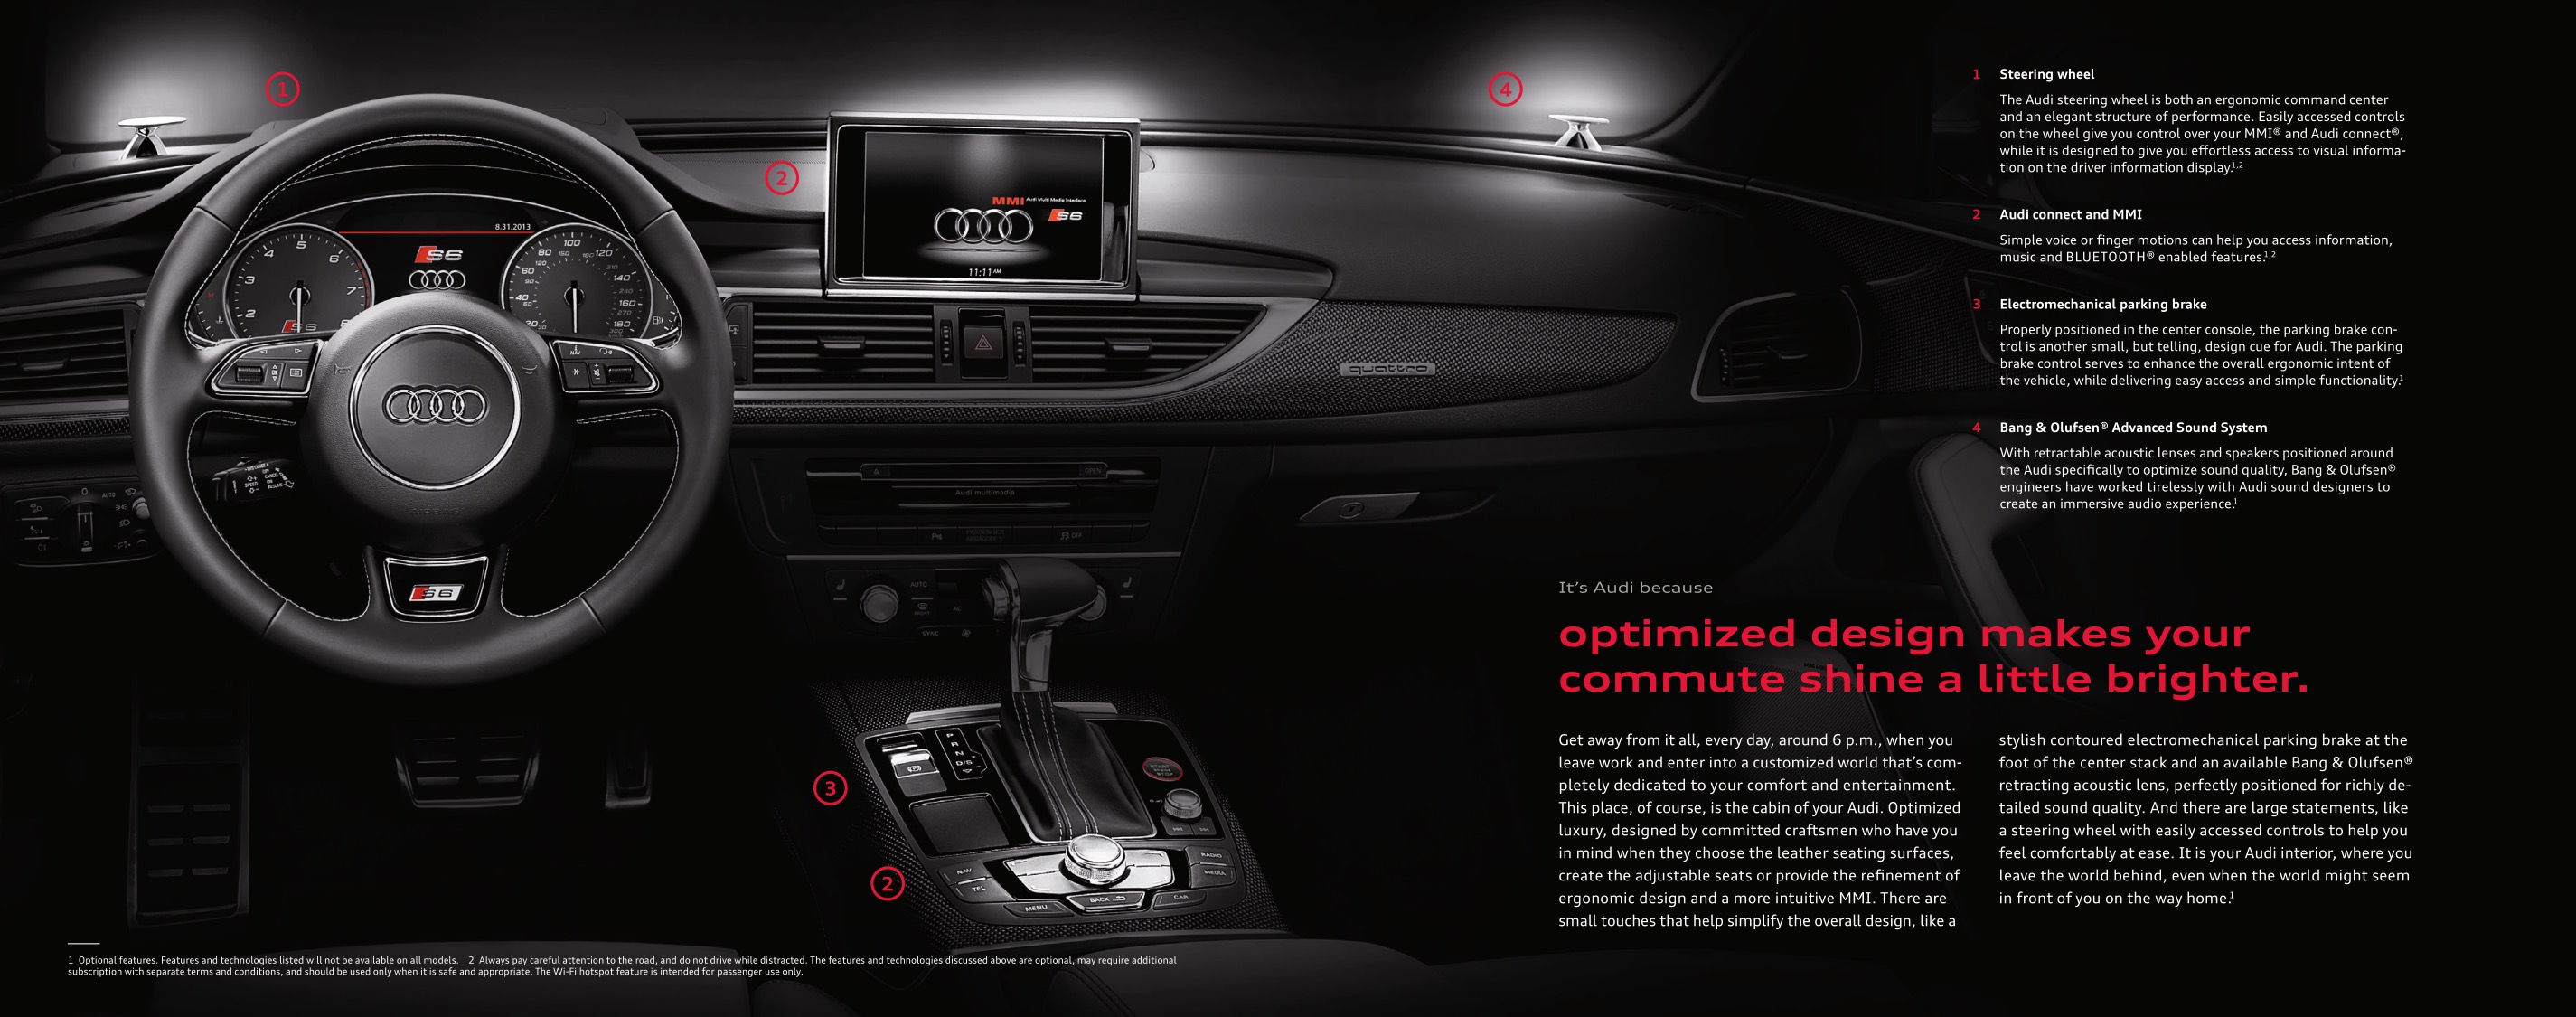 2014 Audi Allroad Brochure Page 5